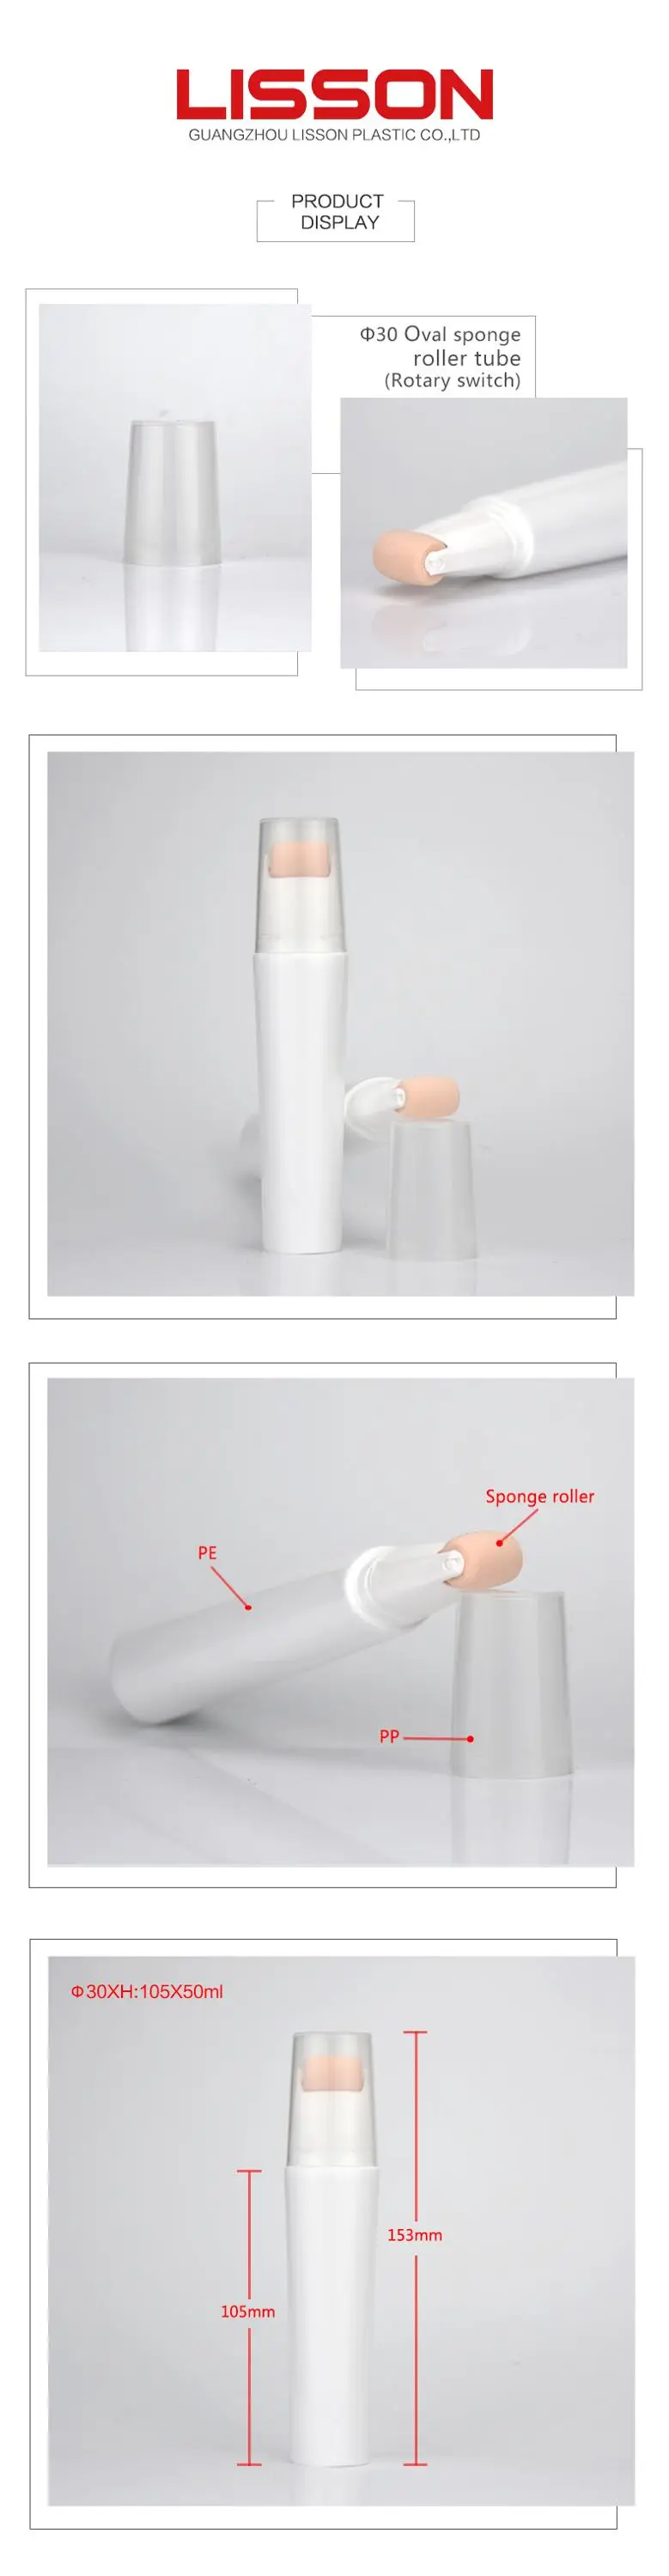 D30 sponge roller tube for face cream container